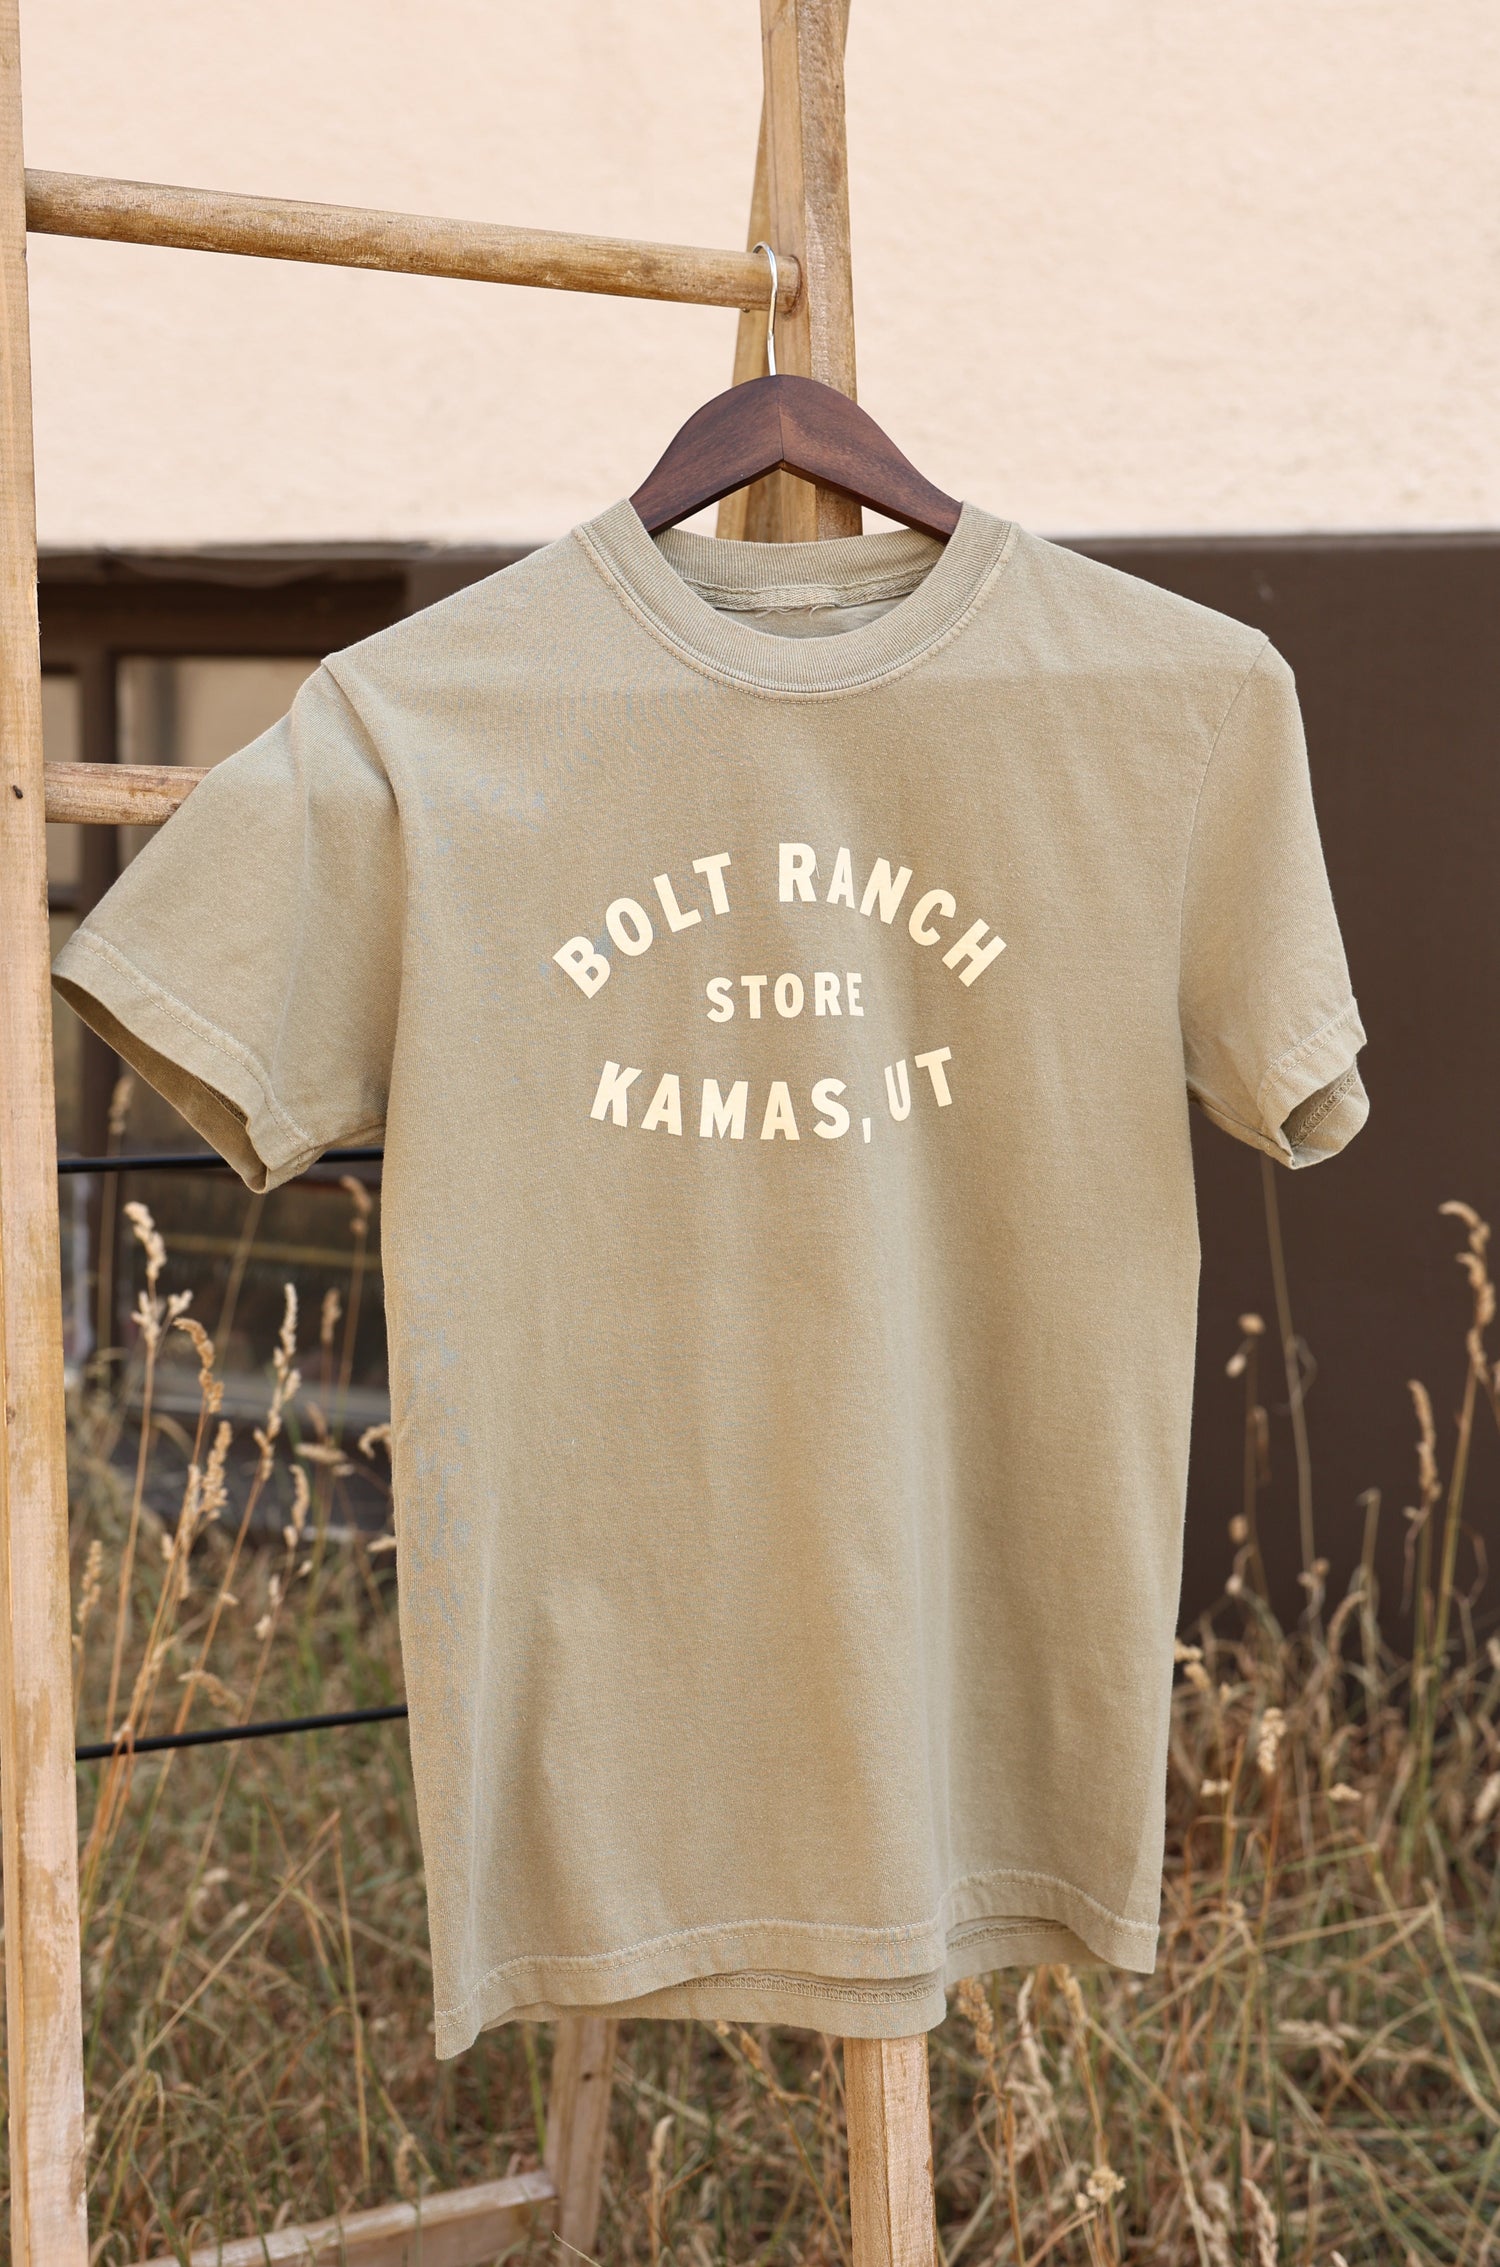 Bolt Ranch Vintage Road Trip Tee